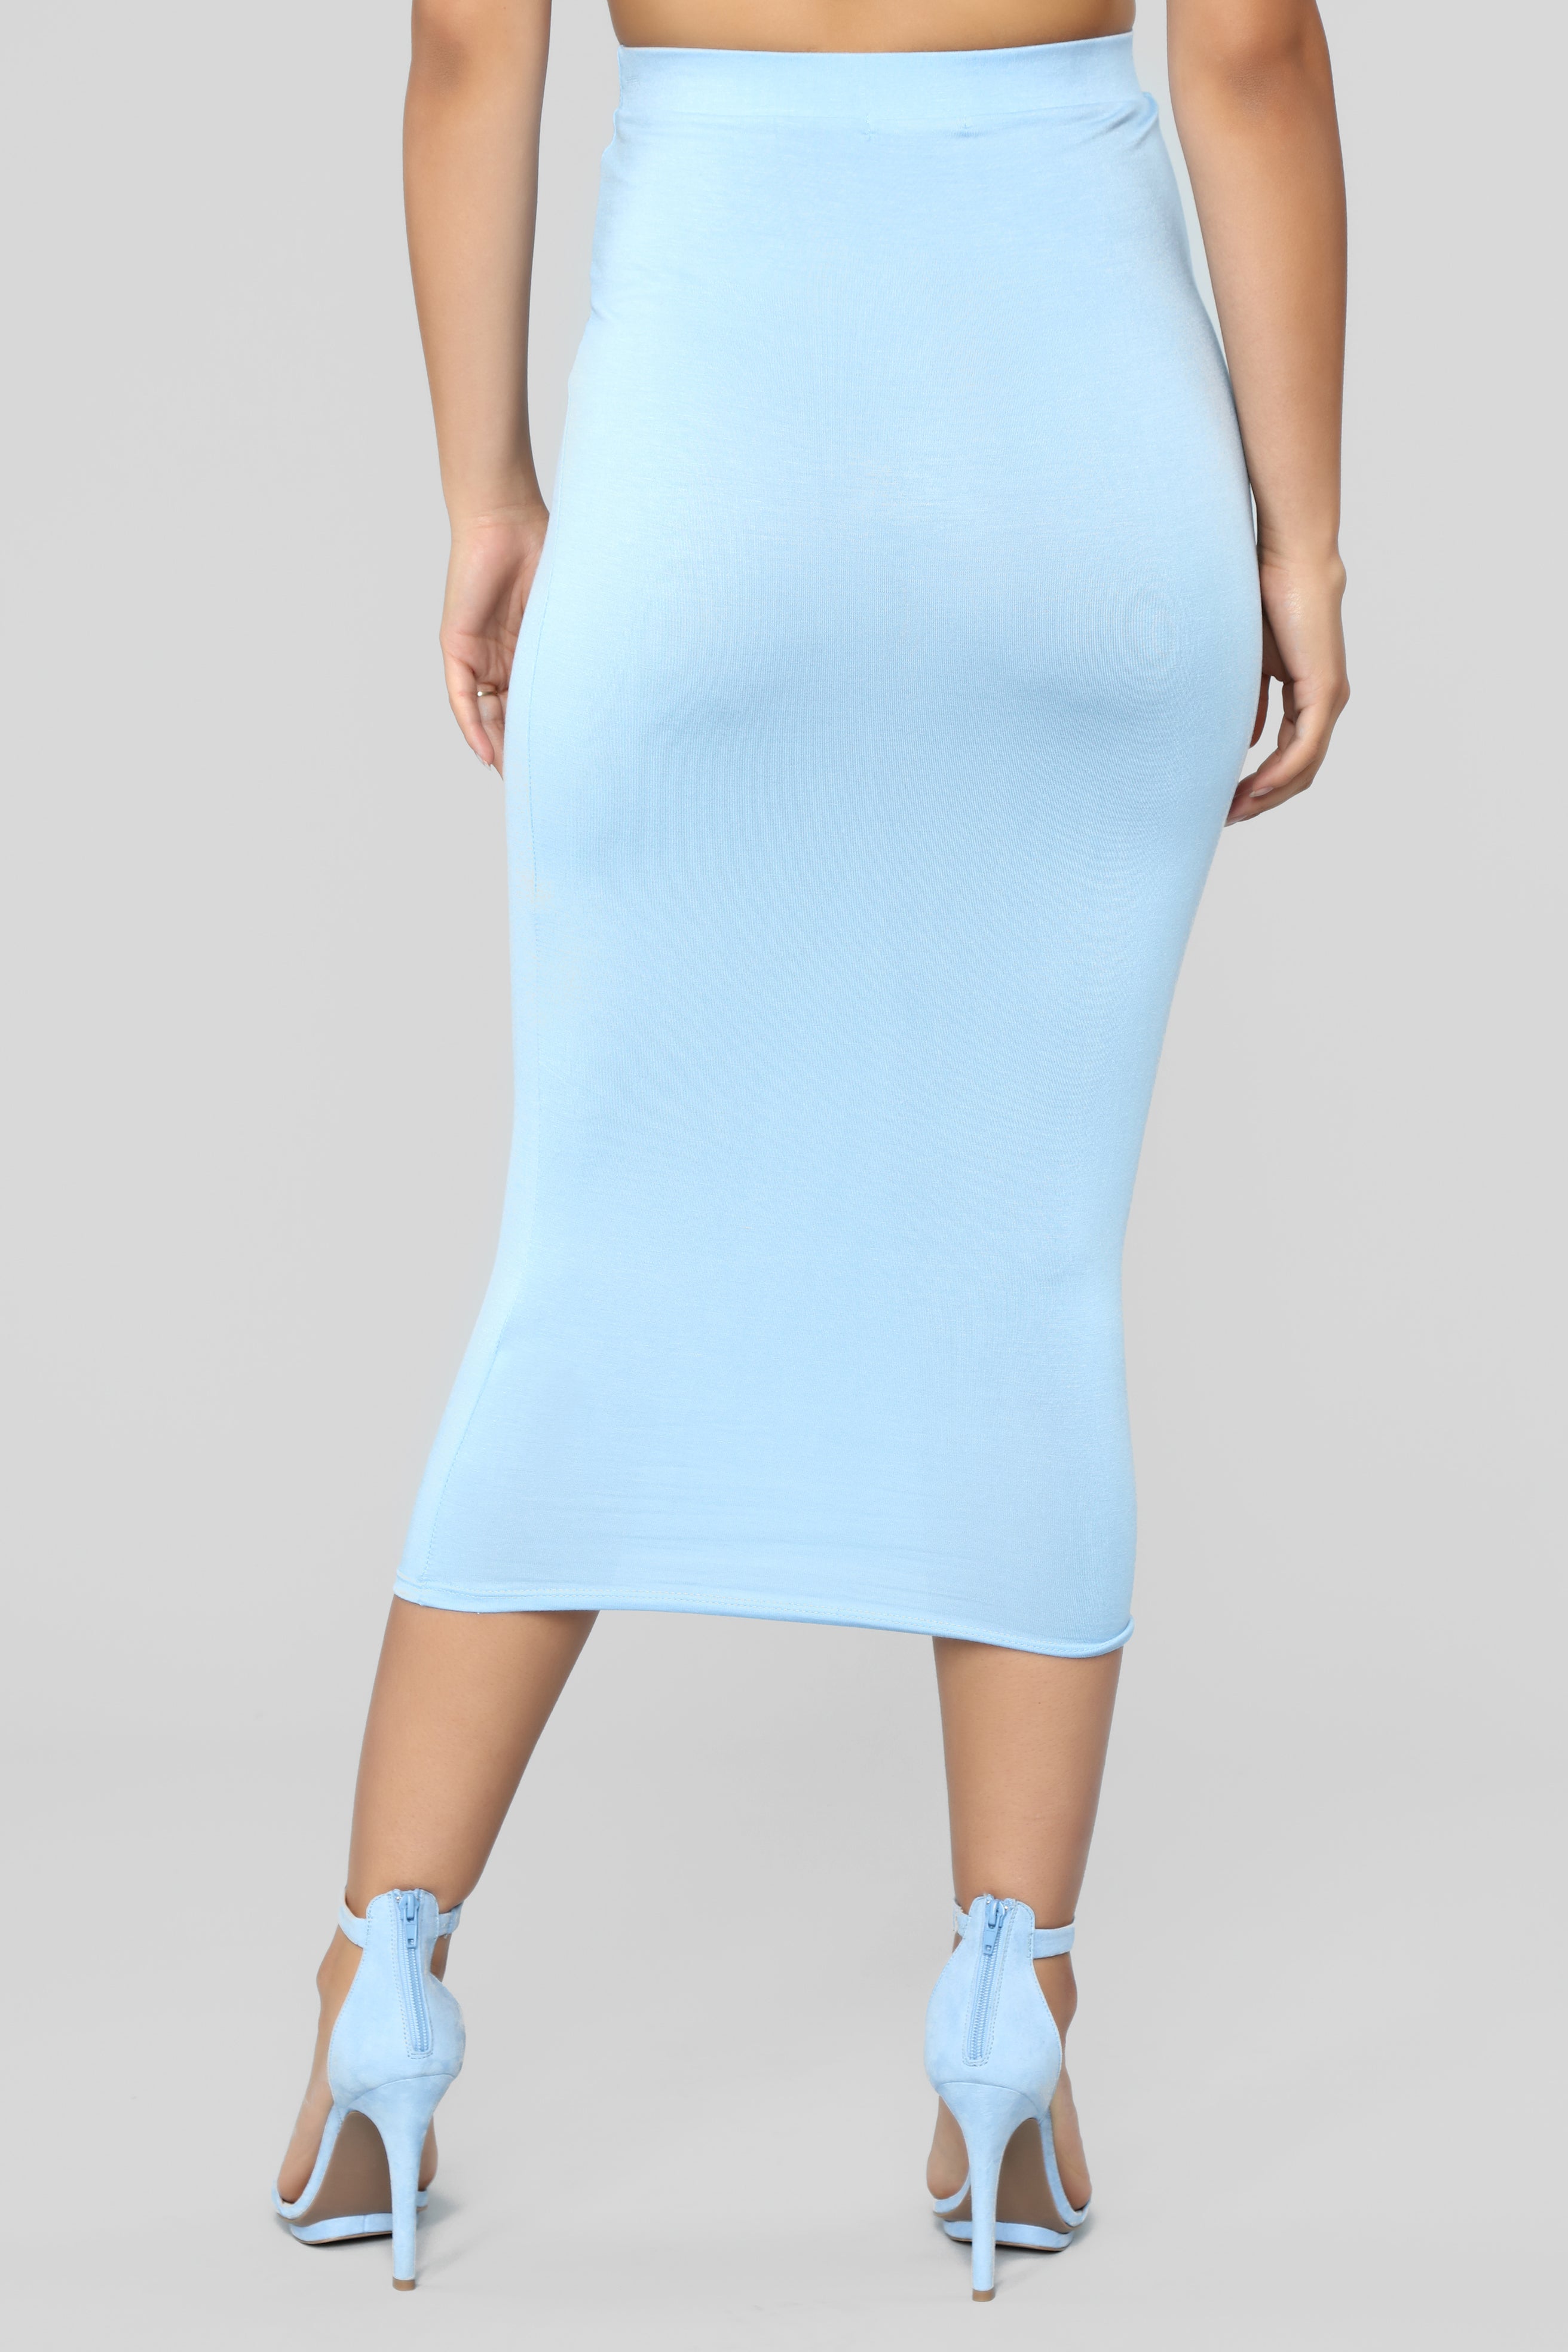 No Manners Skirt Set - Baby Blue – Fashion Nova